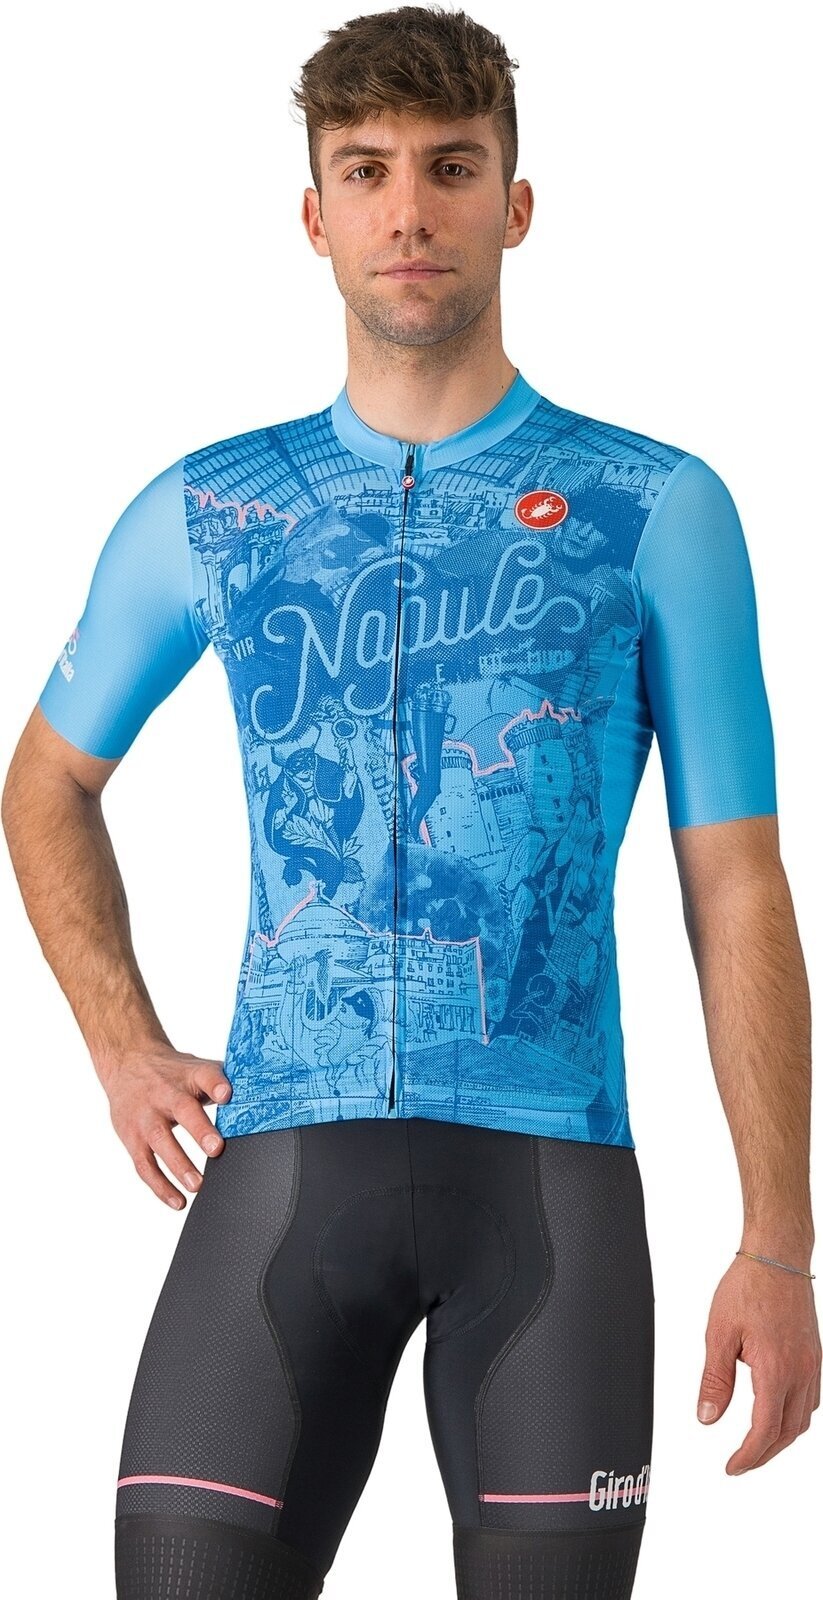 Cycling jersey Castelli Giro107 Napoli Azzurro Napoli M